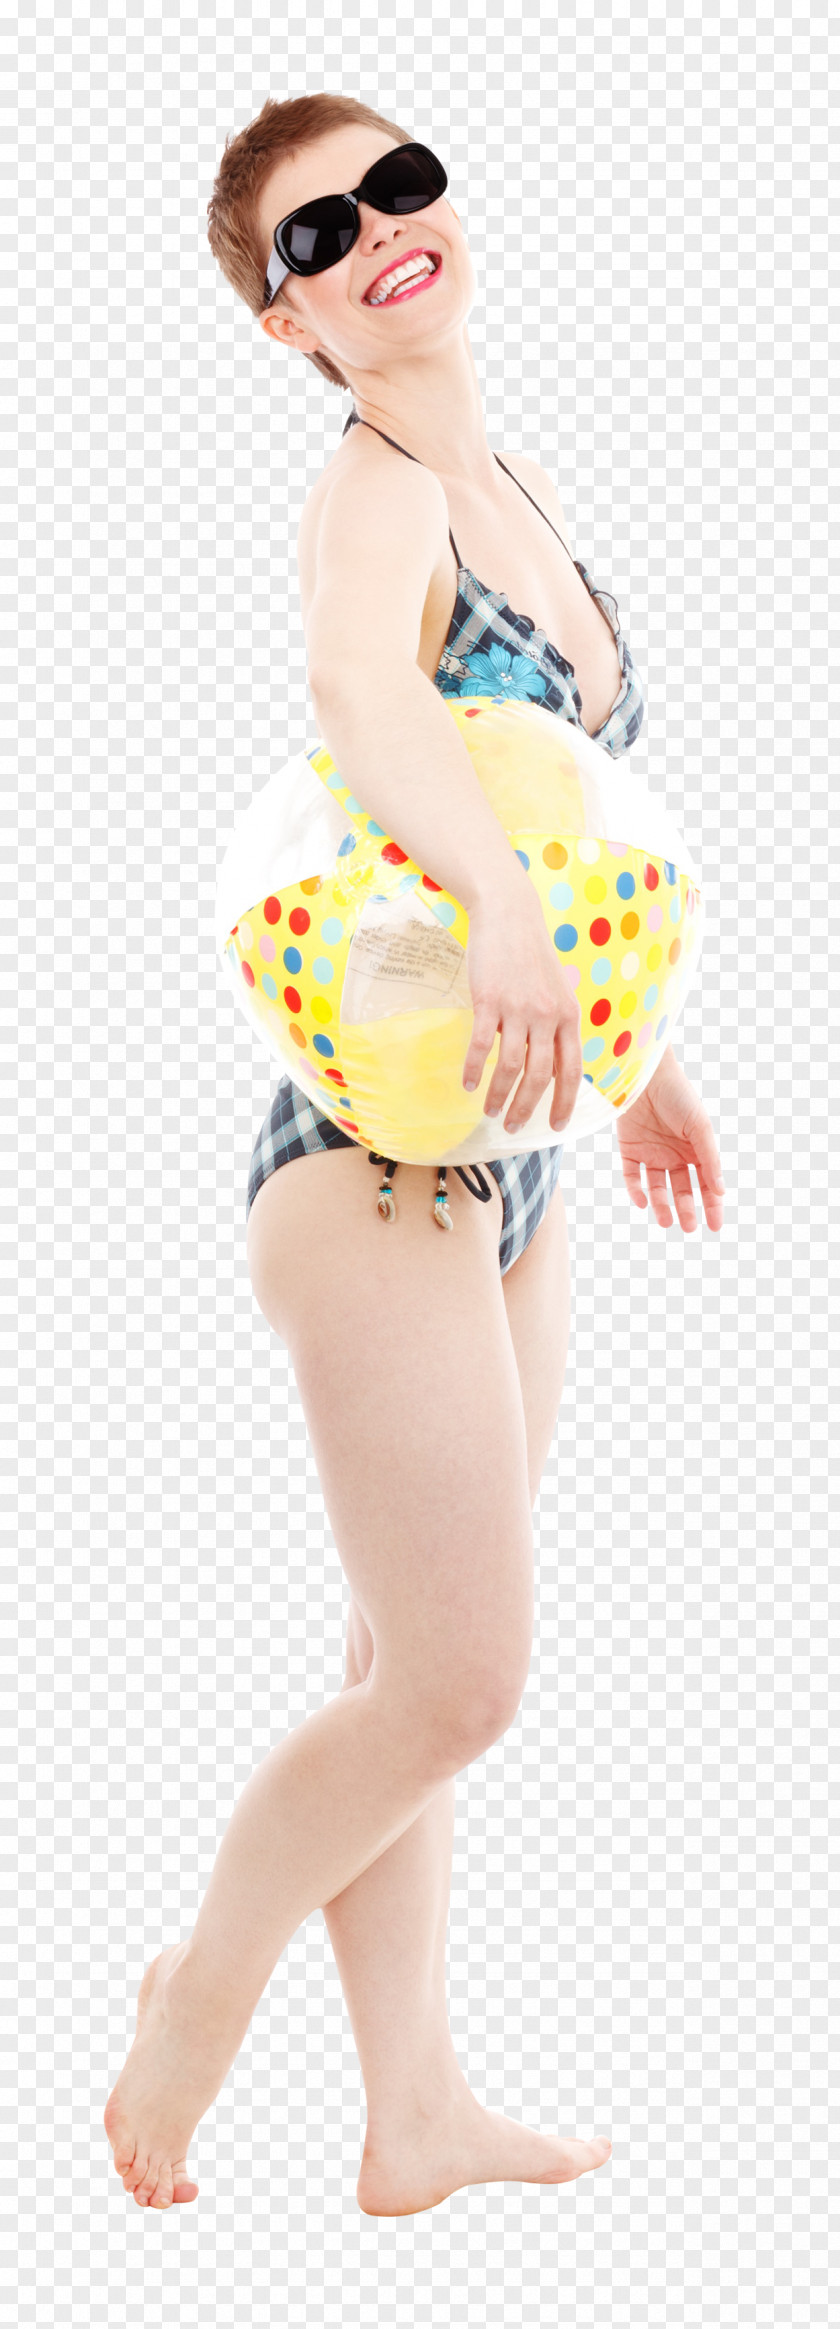 Bikini Polka Dot Beach Ball PNG dot ball, Happy Sexy Woman with Ball, woman standing wearing bikini while holding ball and smiling clipart PNG